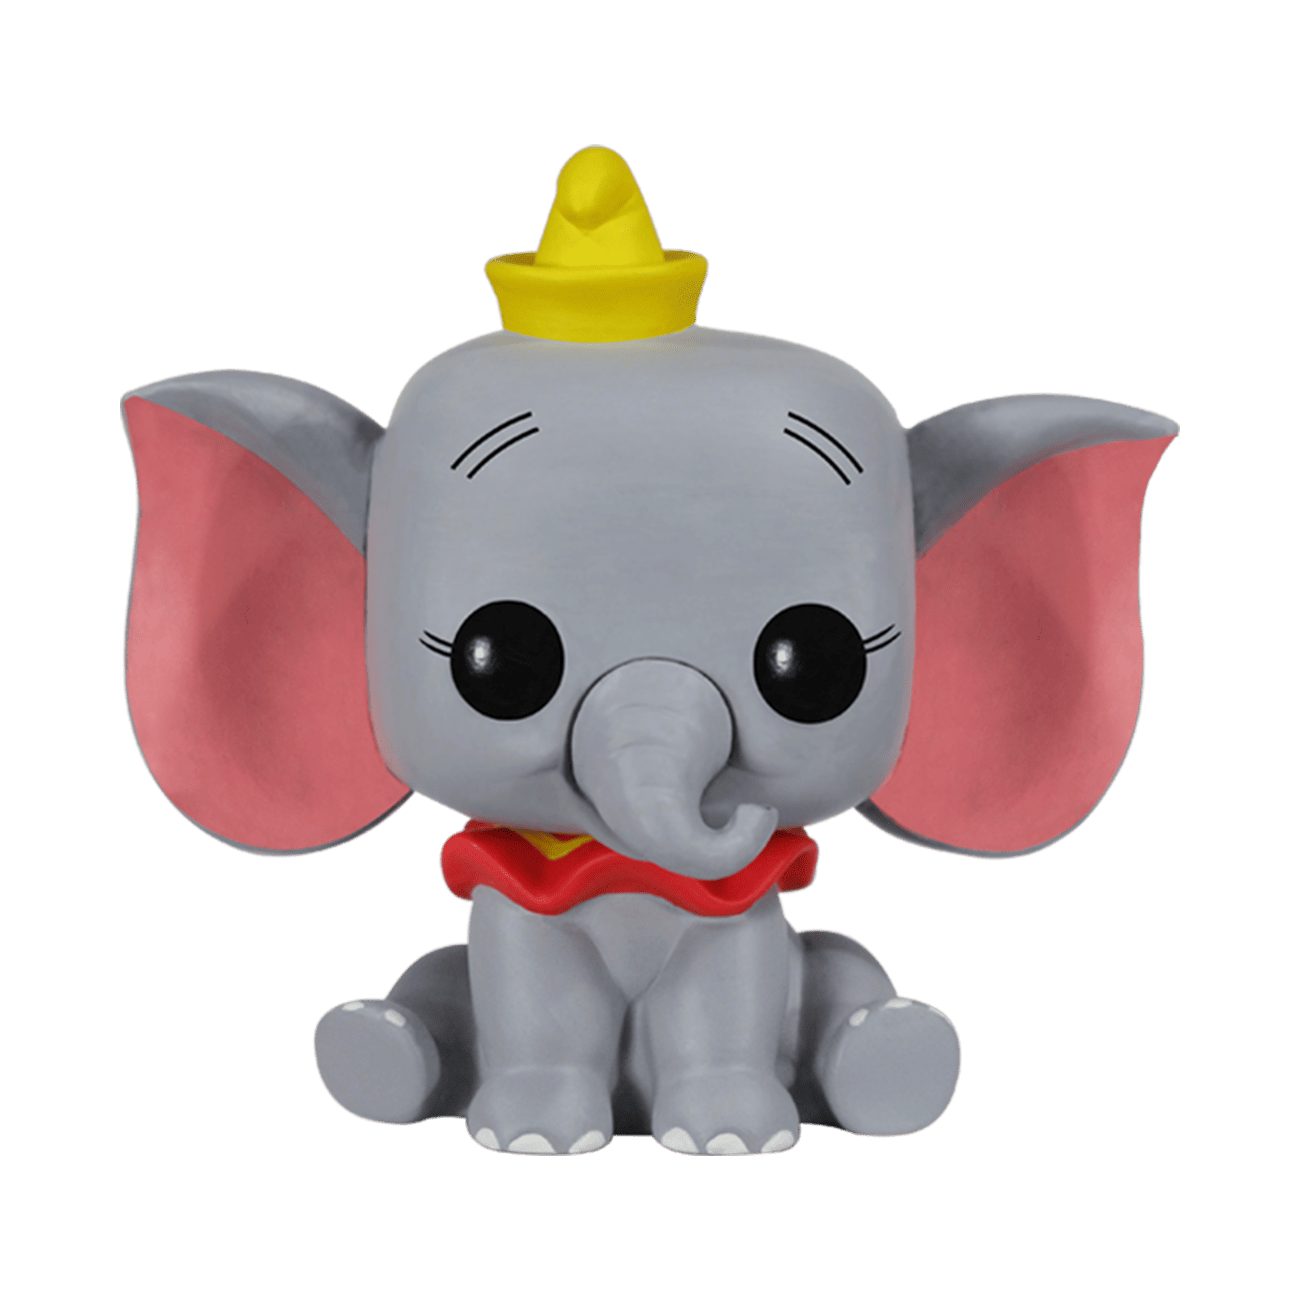 Buy at Dumbo Pop!